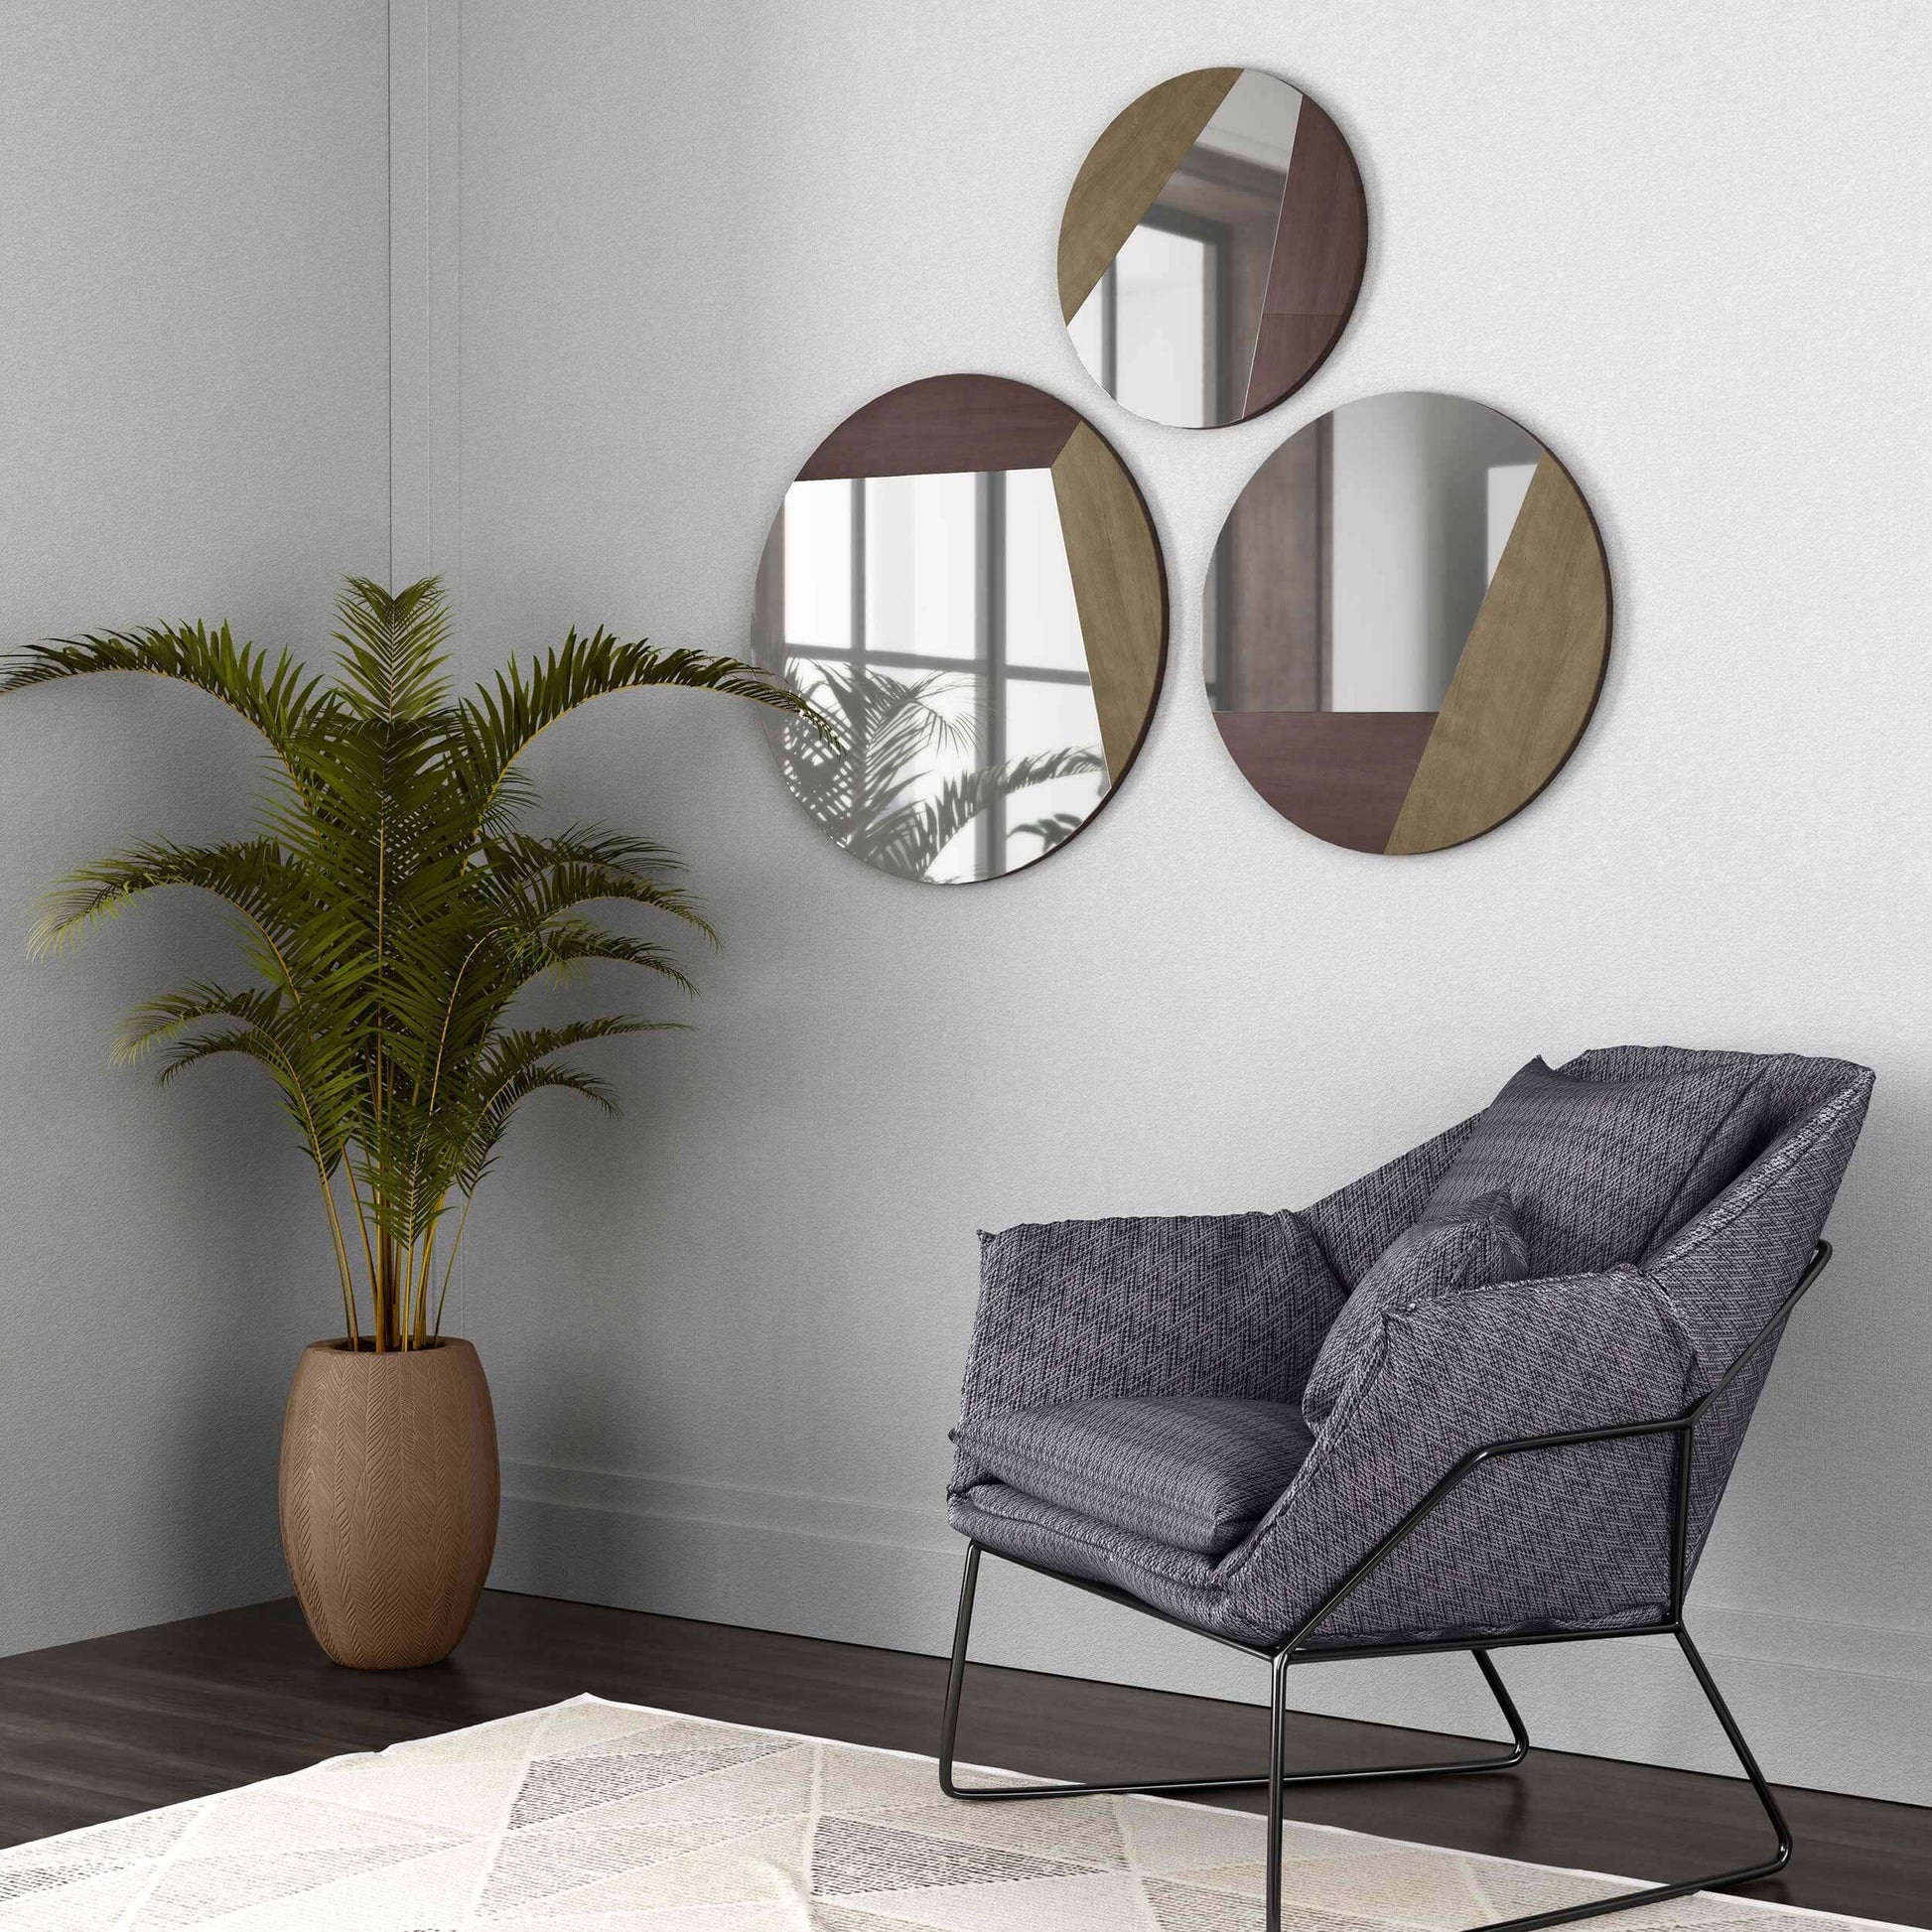 Wall decor with Maklin mirror set above modern gray chair